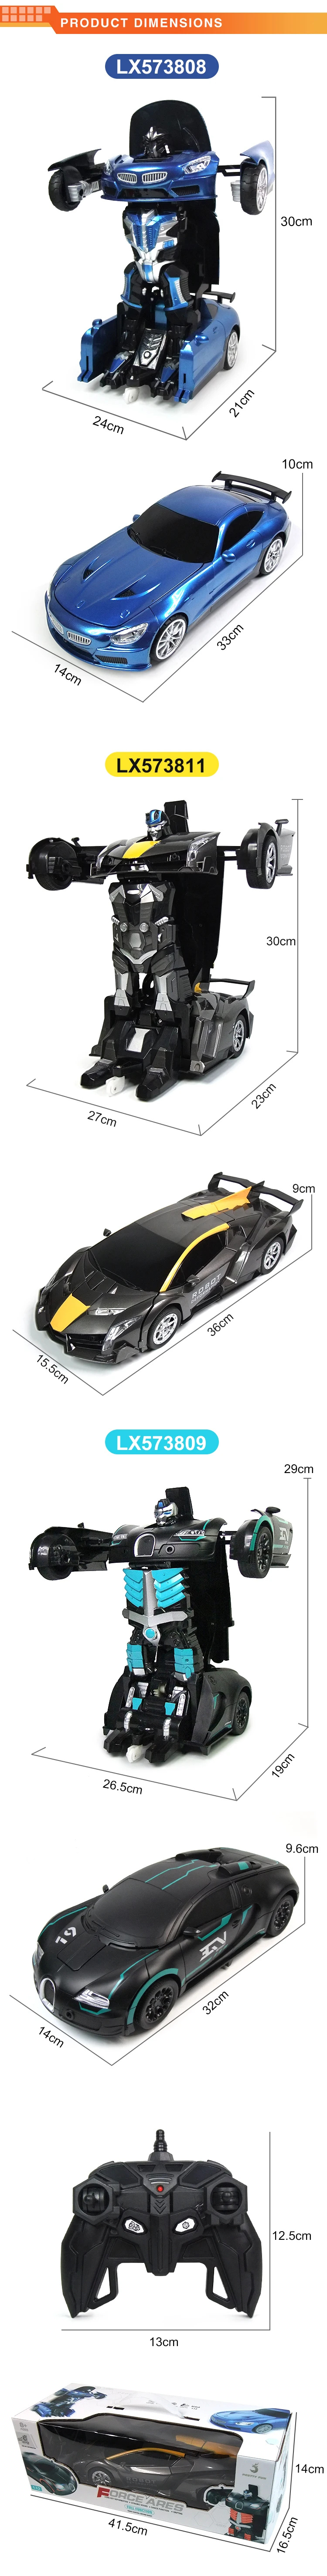 Hot sale 2 in 1 RC toys  deformation robot car for kids